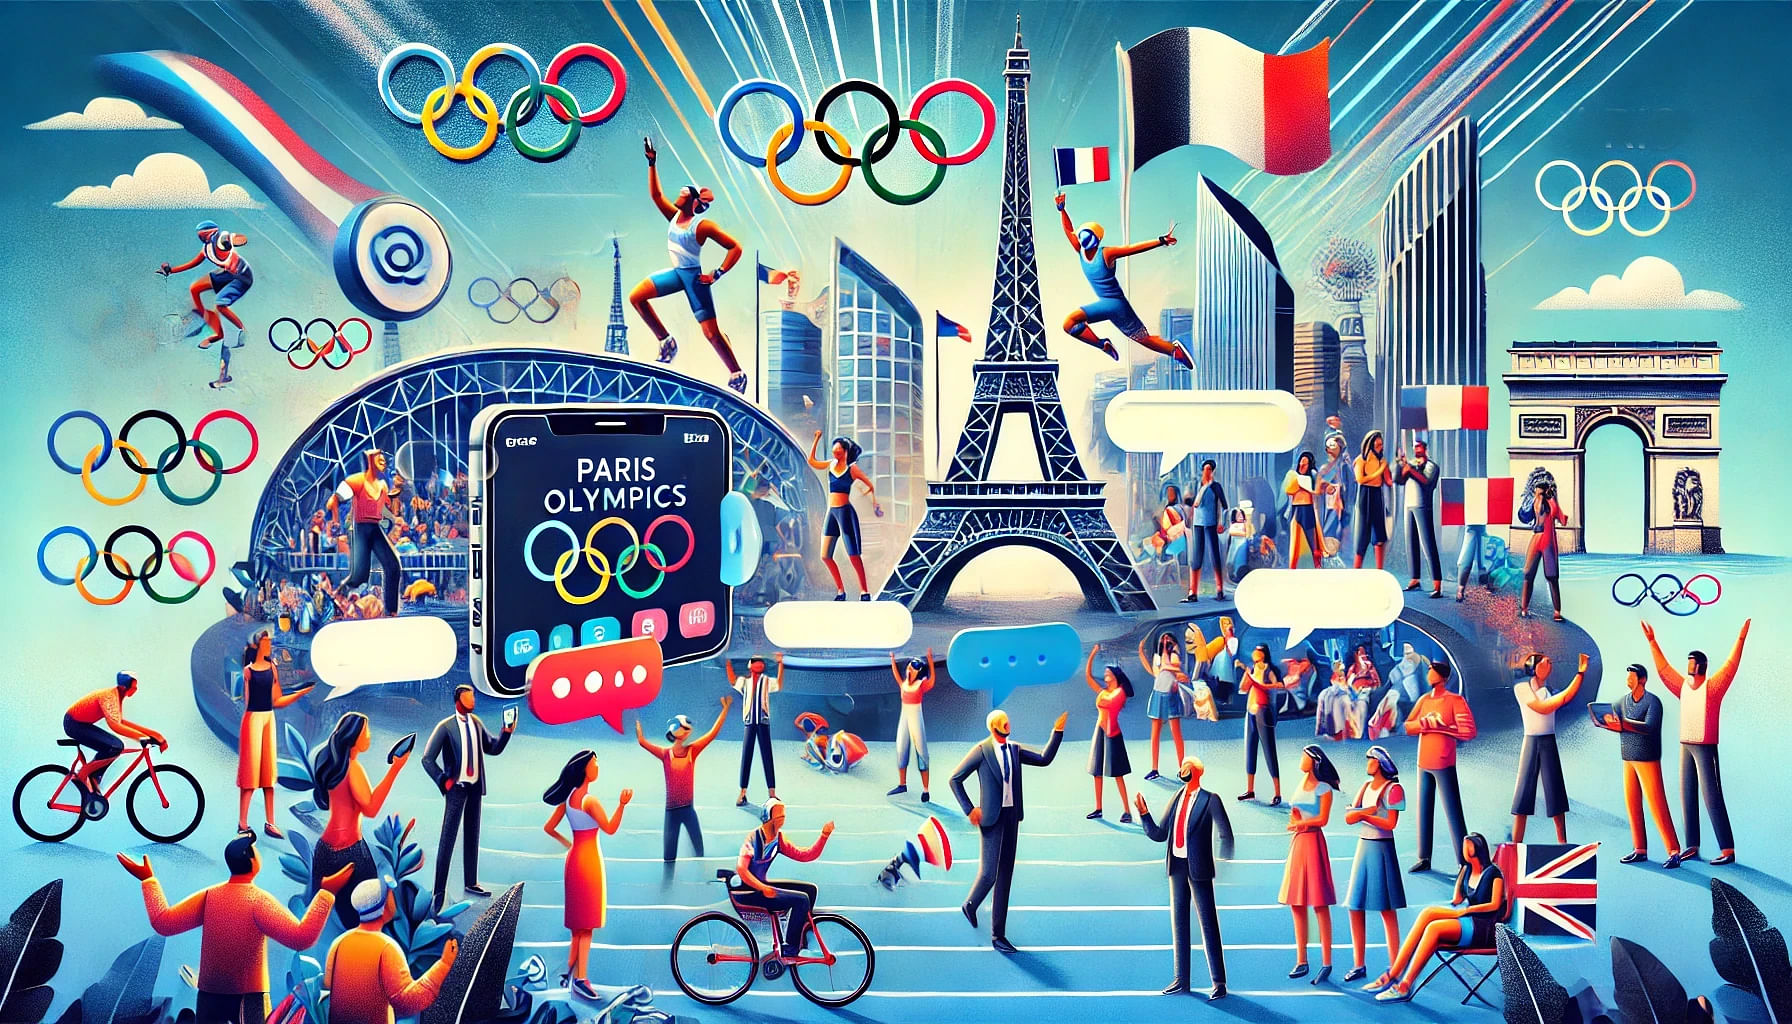 Paris 2024 Olympics: Language Diversity & Inclusivity